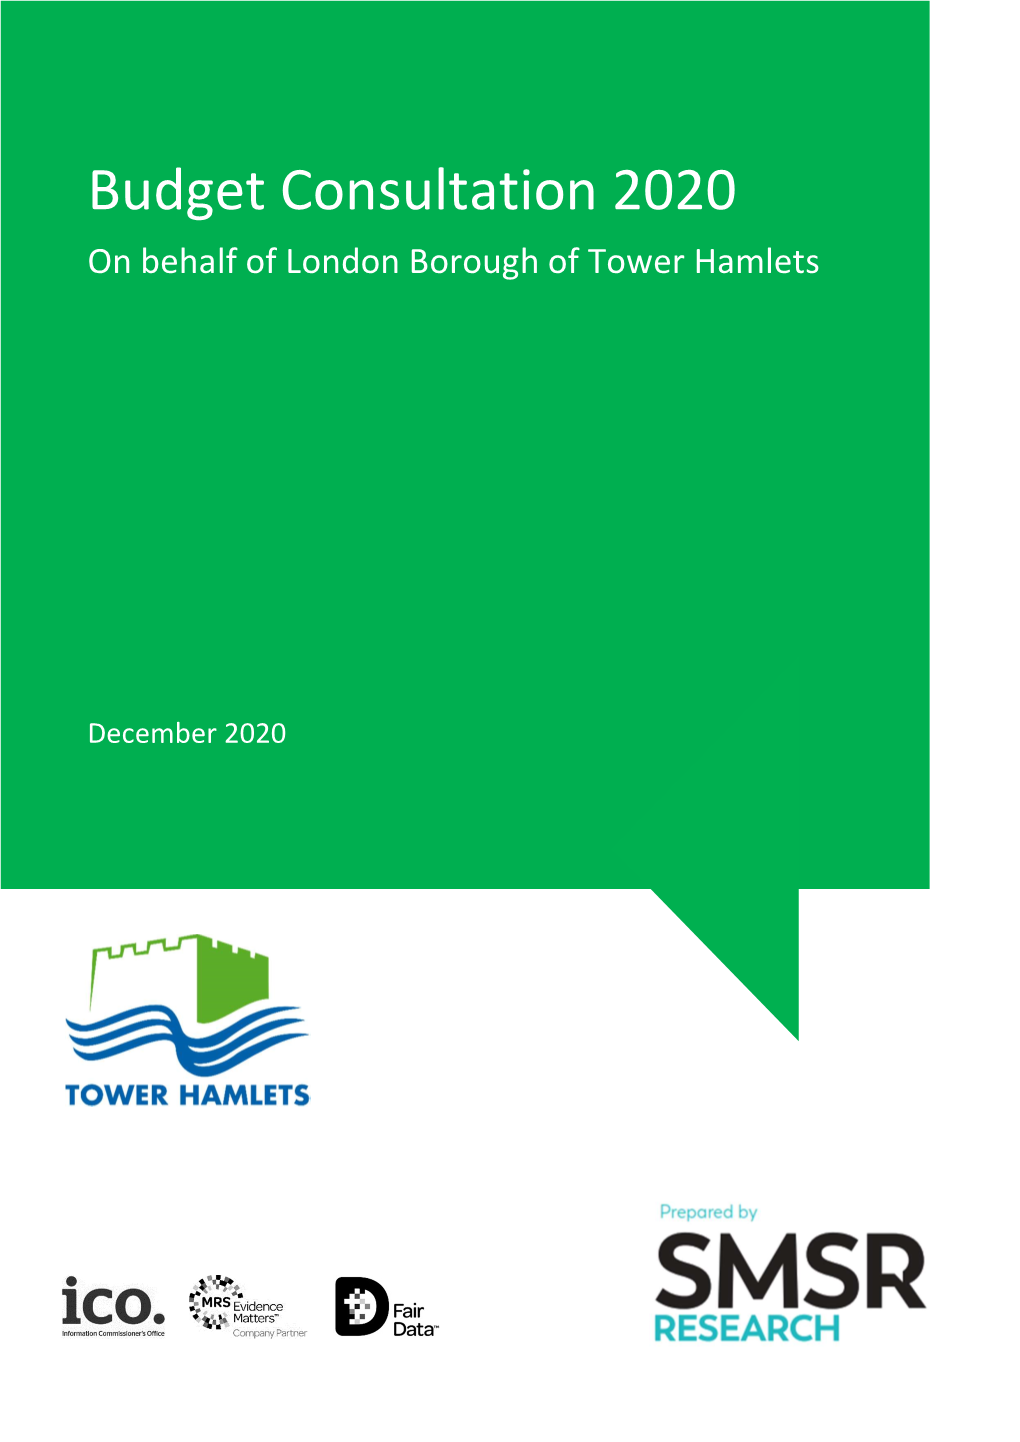 Budget Consultation 2020 on Behalf of London Borough of Tower Hamlets